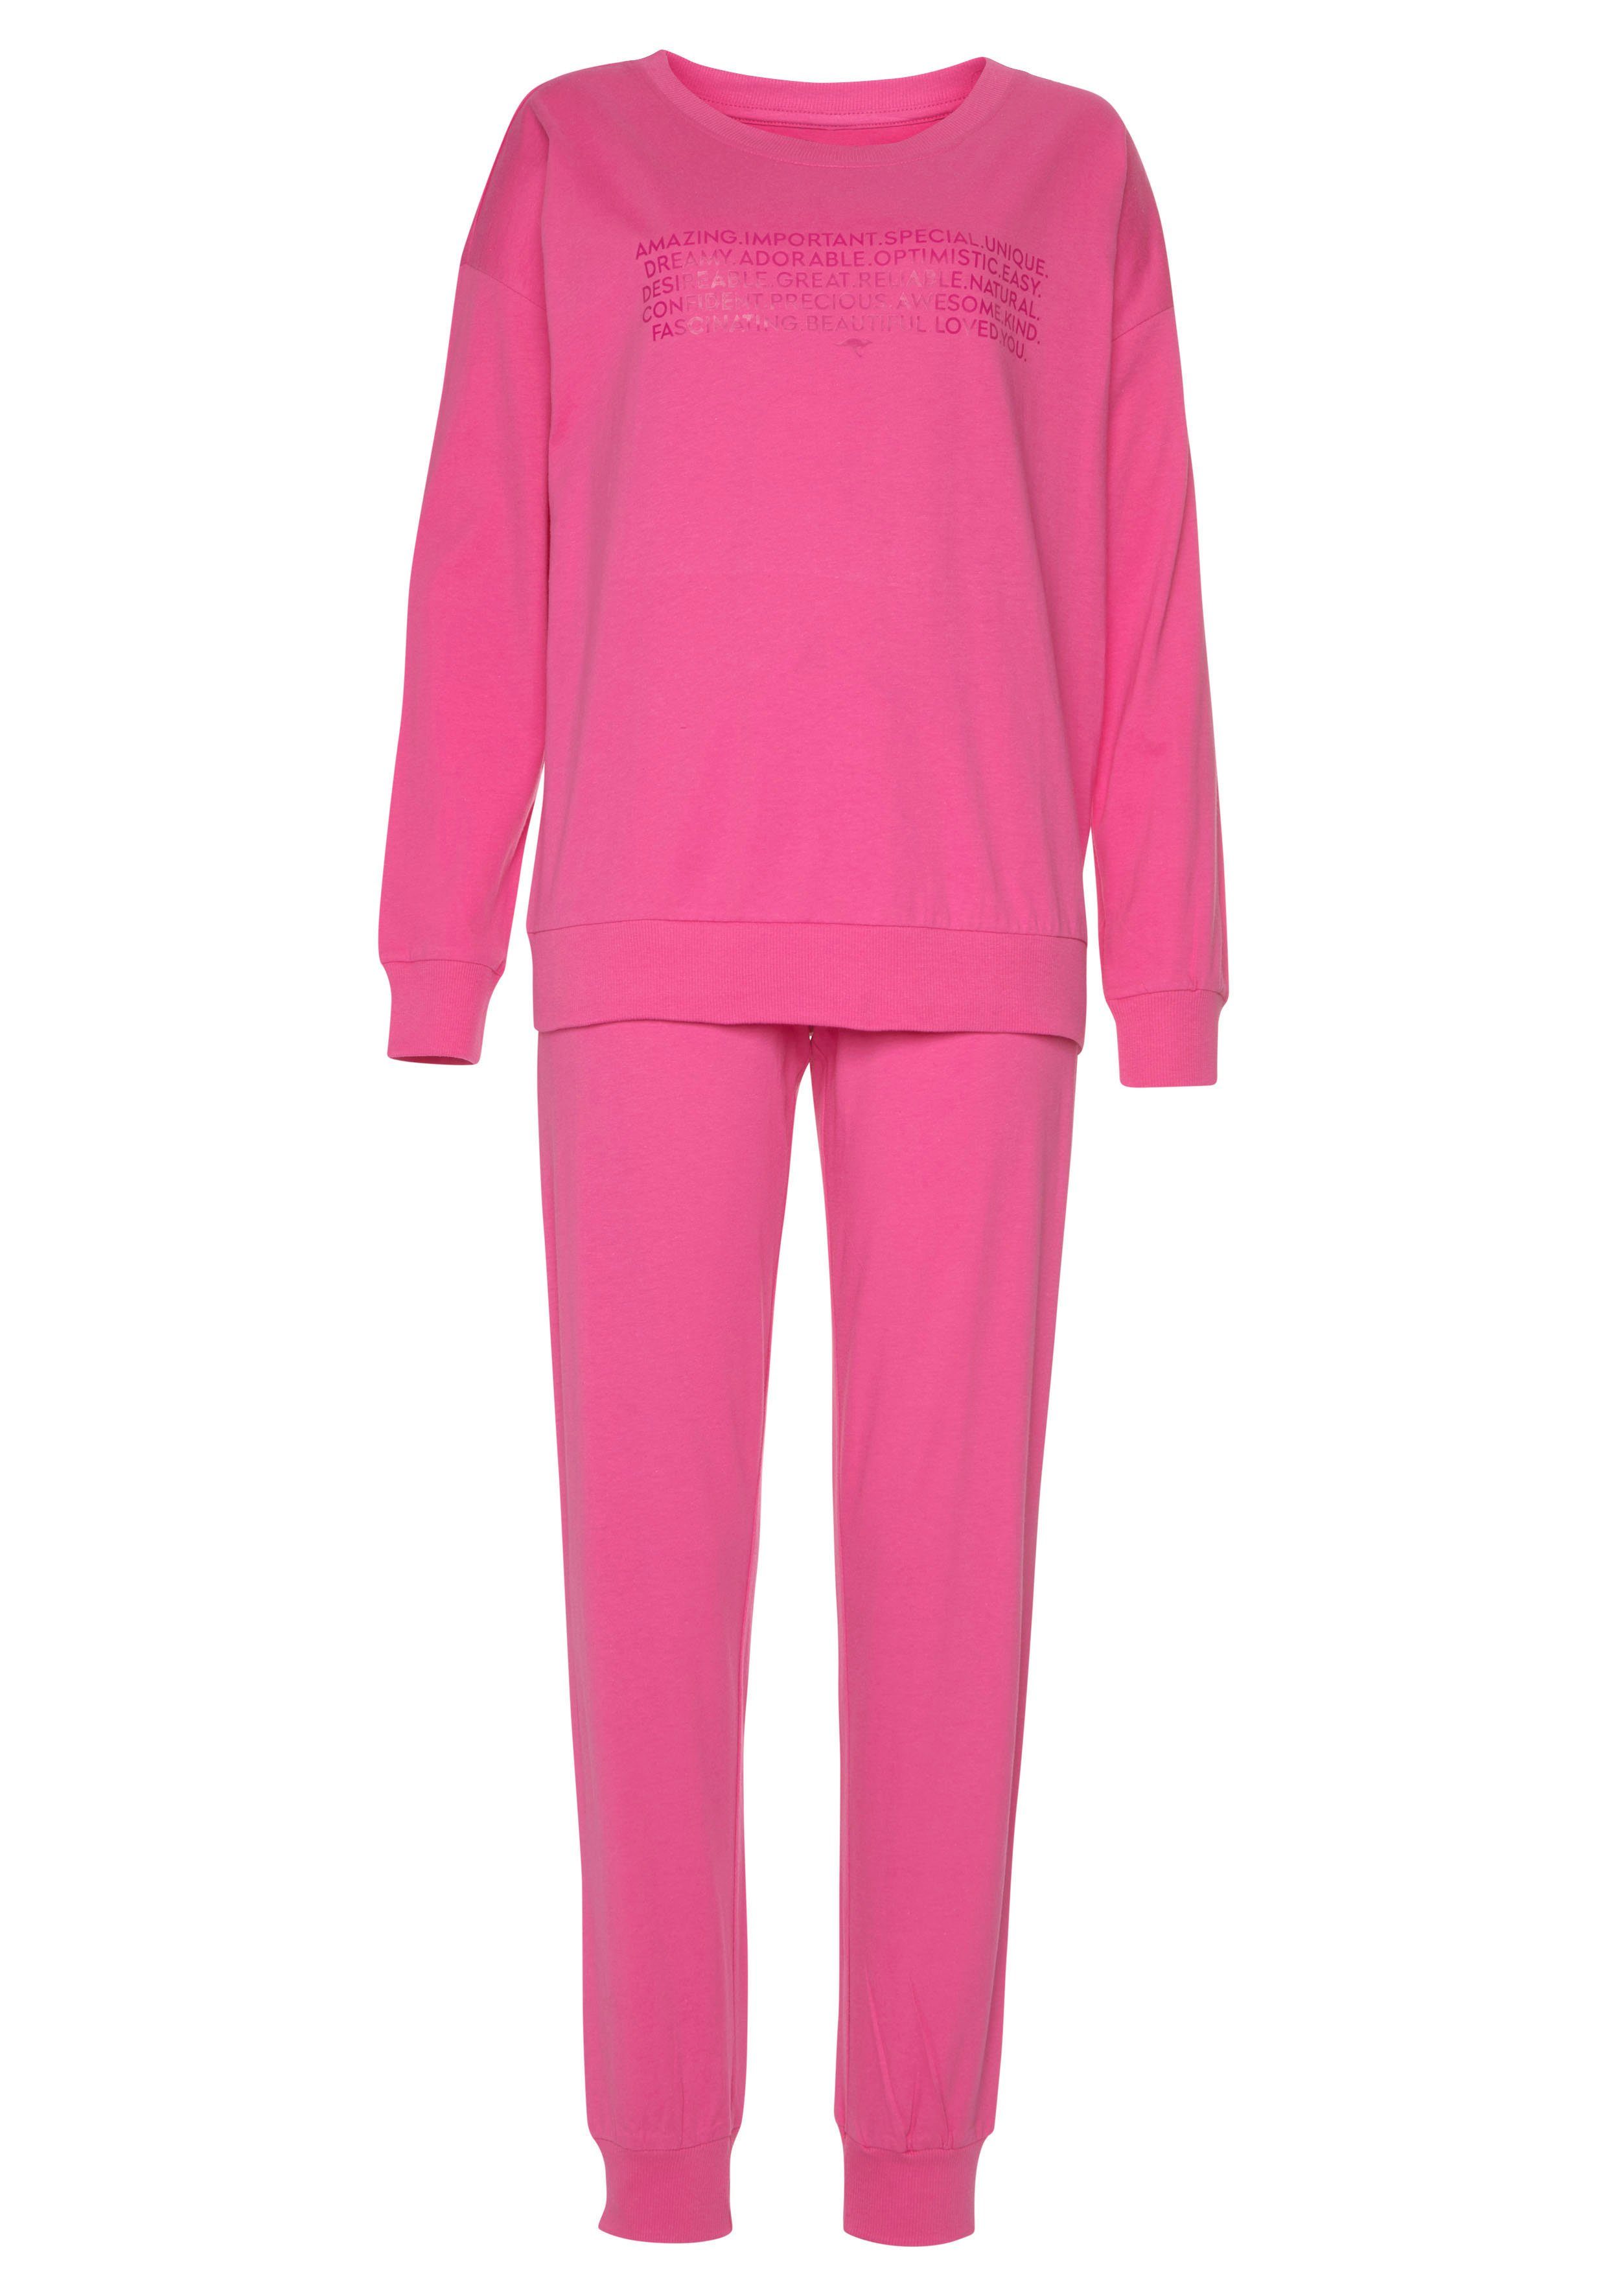 tlg., 1 Pyjama Slogan-Frontdruck Stück) (2 pink mit KangaROOS